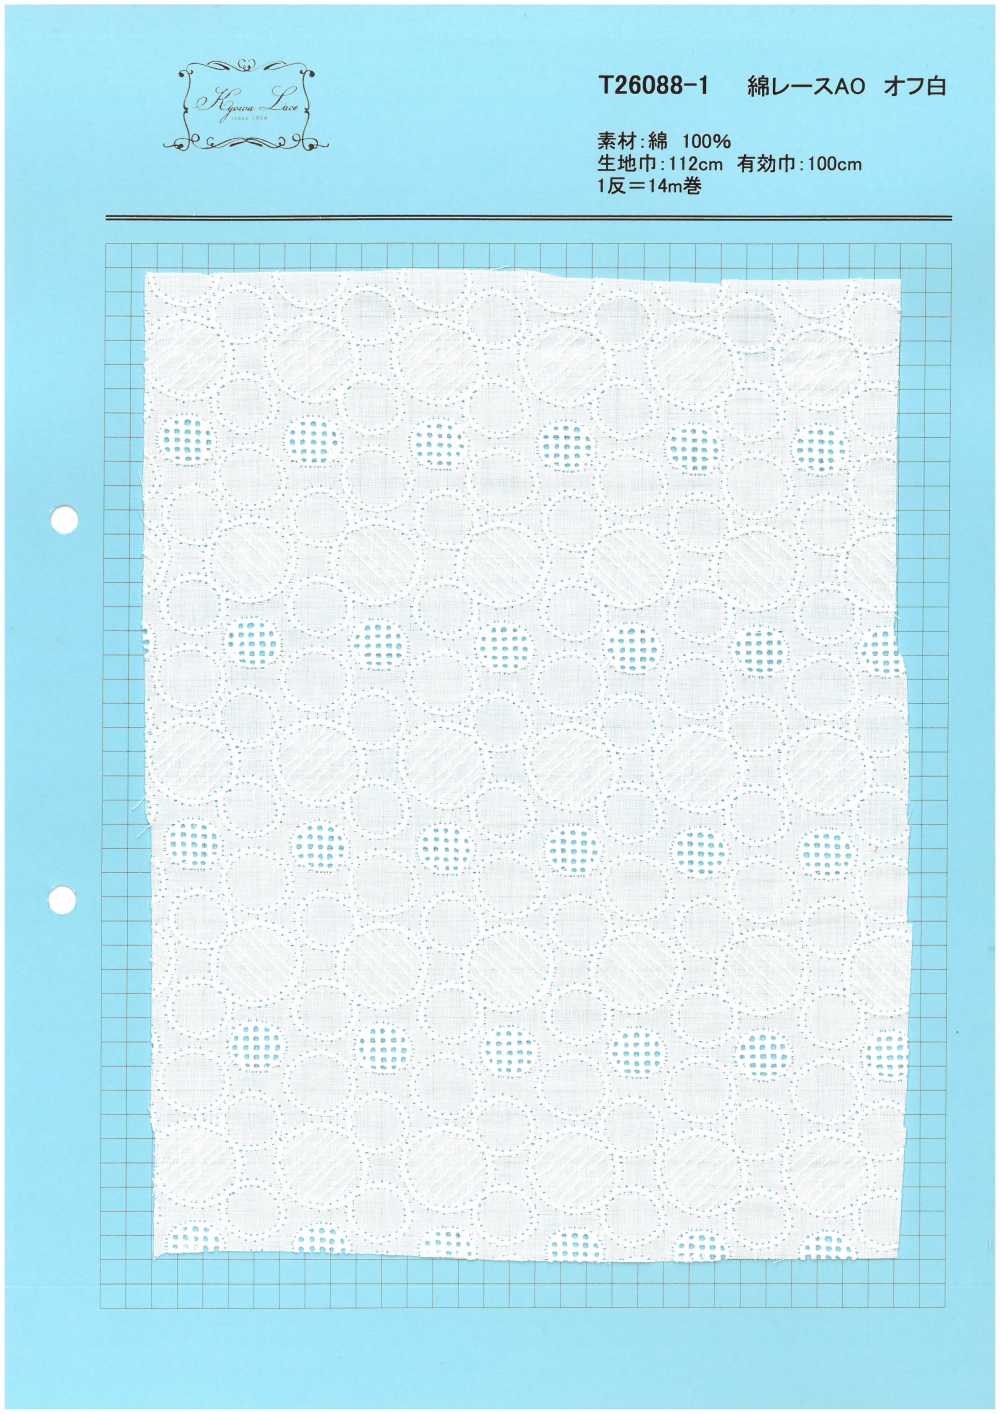 T26088-1 Puntilla Algodón AO Blanco Roto[Fabrica Textil] Kyowa Lace